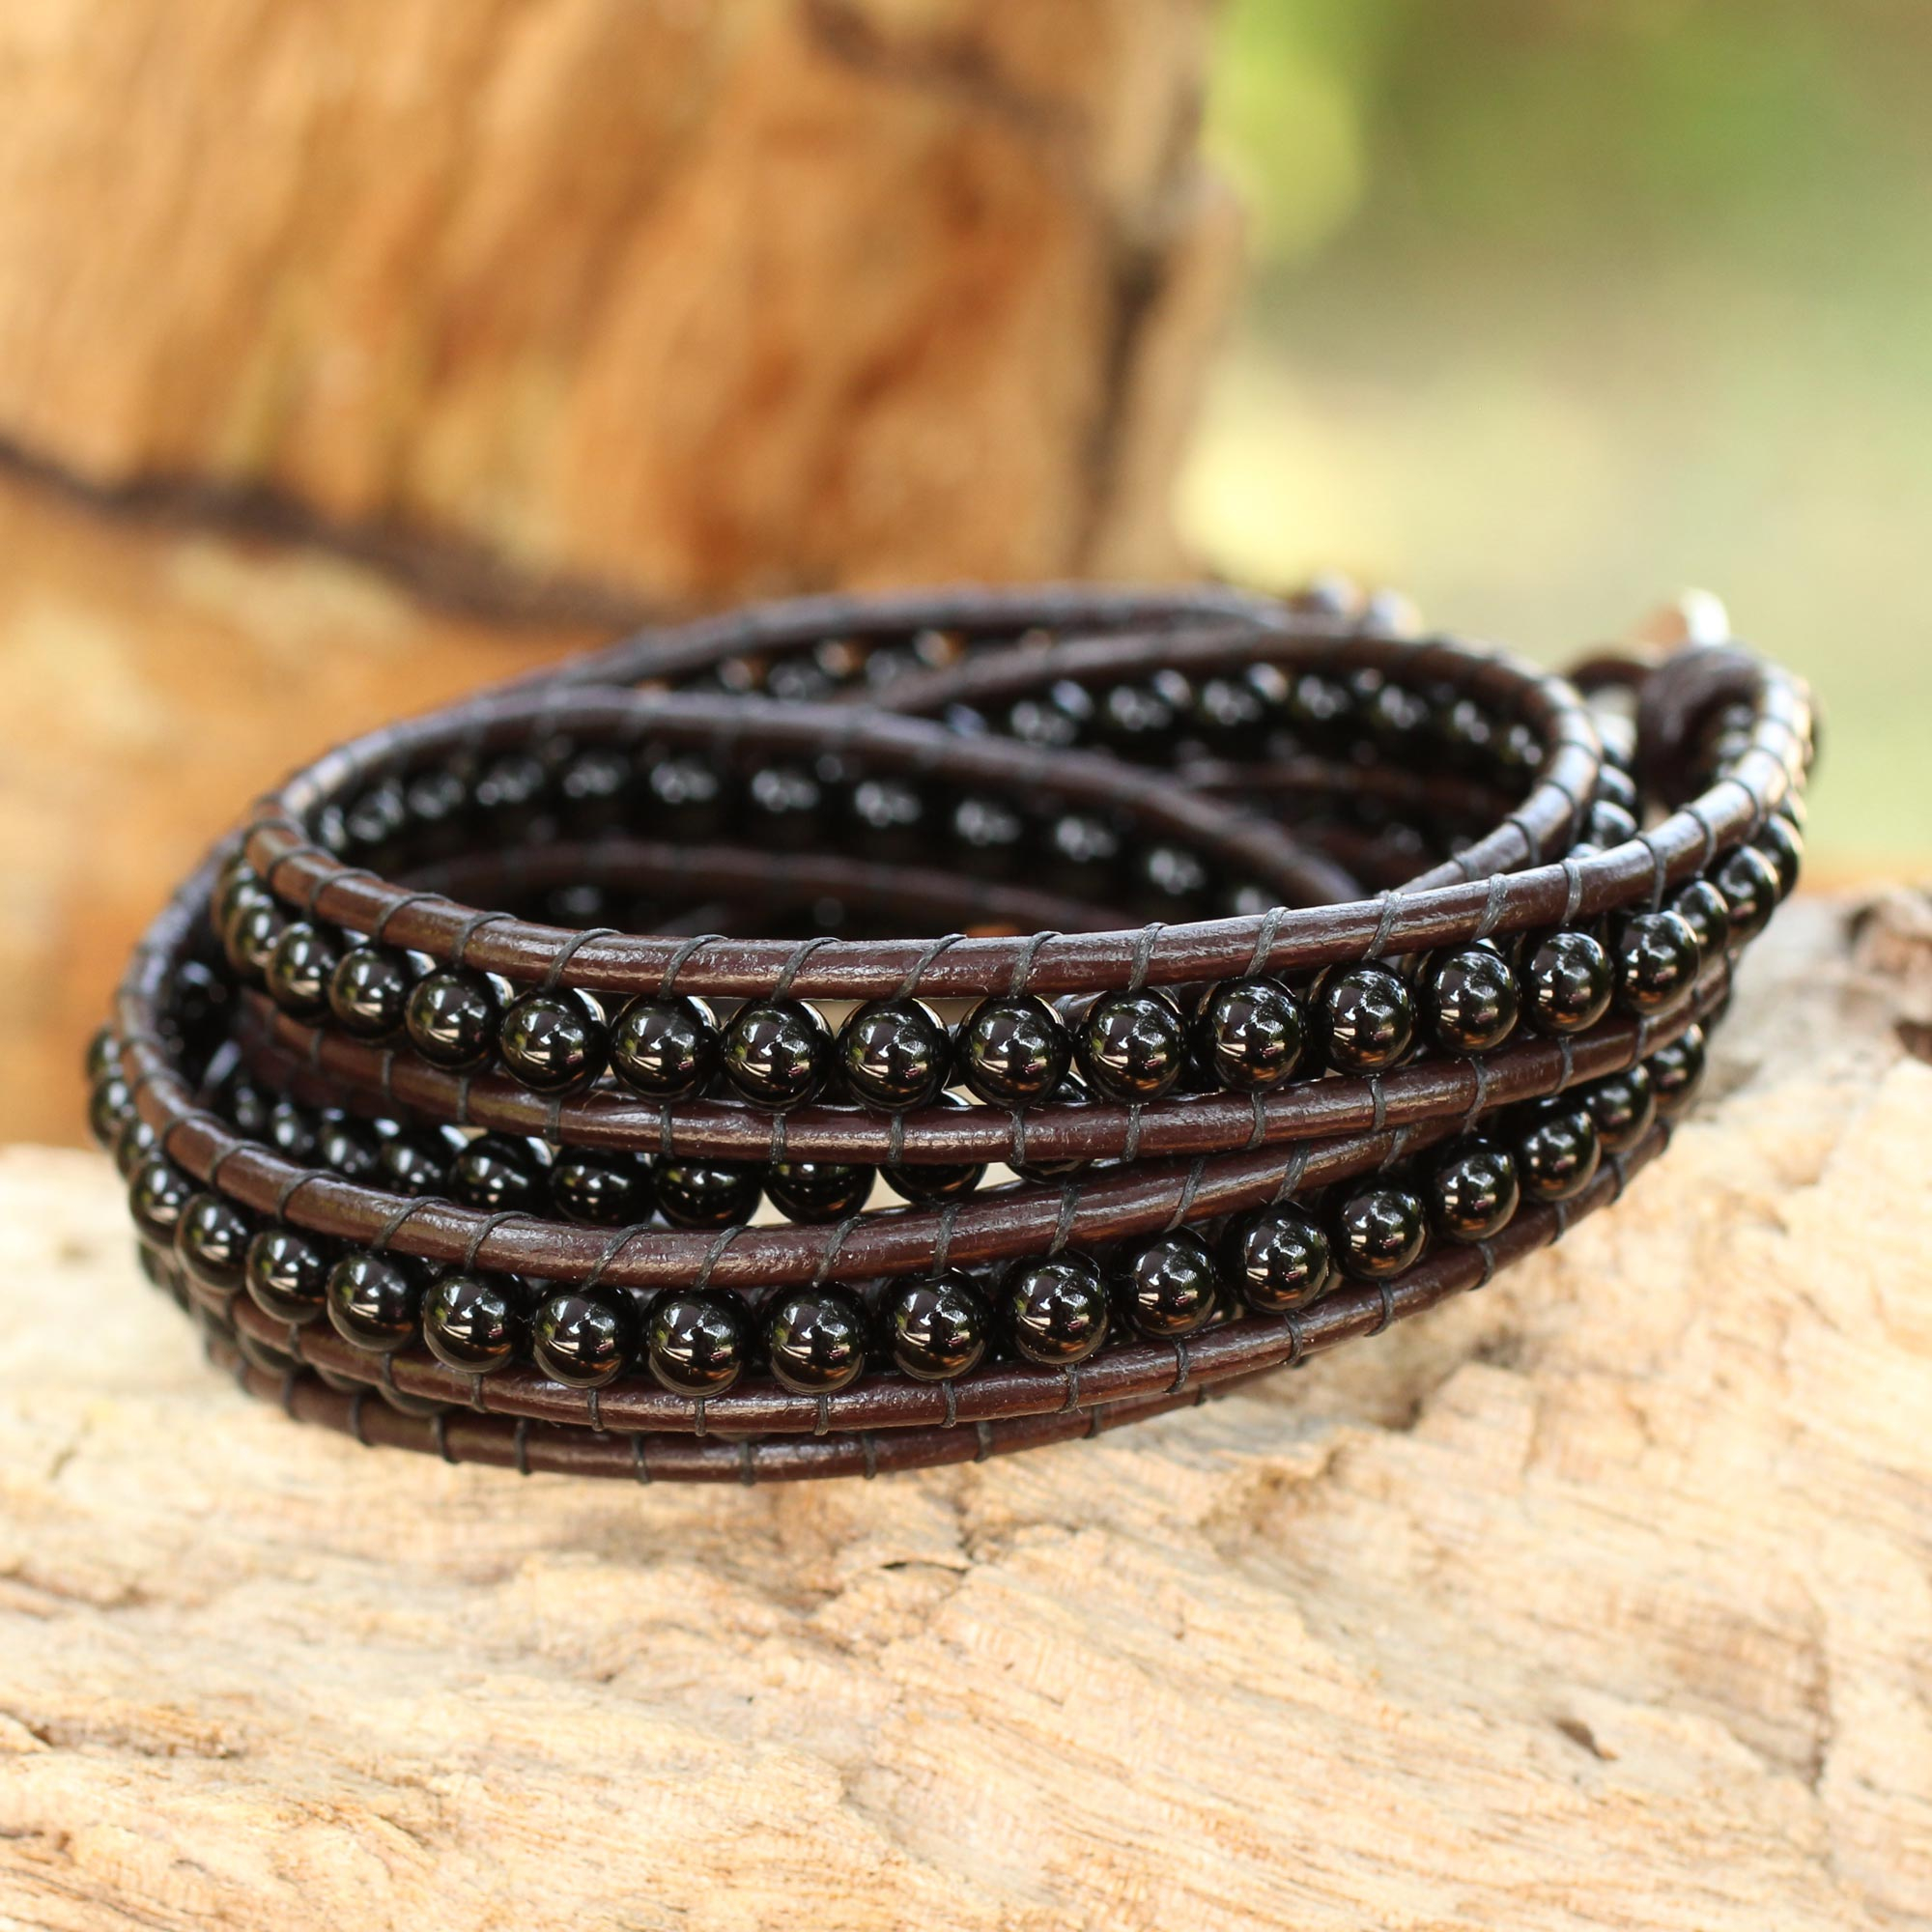 Cinnamon Brown Leather Braided Bracelet from Thailand - Cinnamon Braid